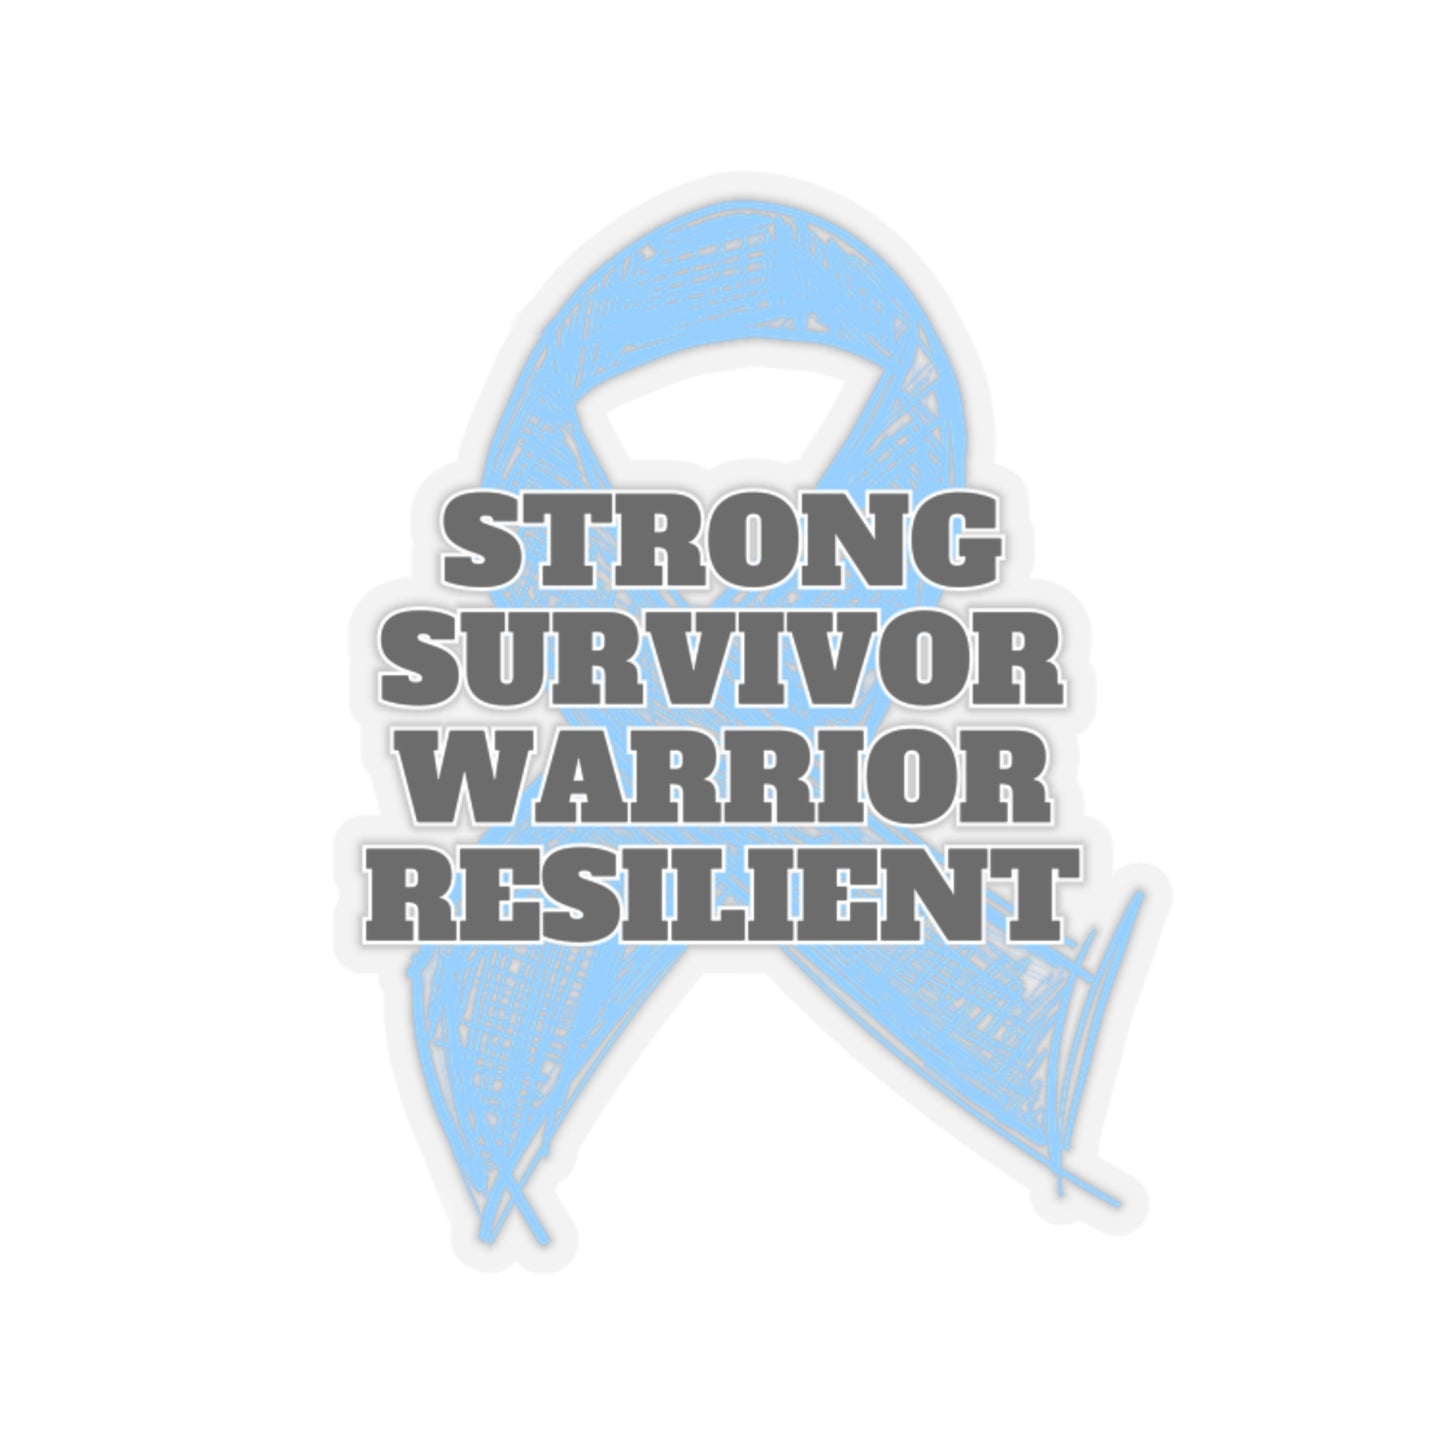 Strong Survivor Warrior Resilient Light Blue Ribbon Kiss-Cut Stickers